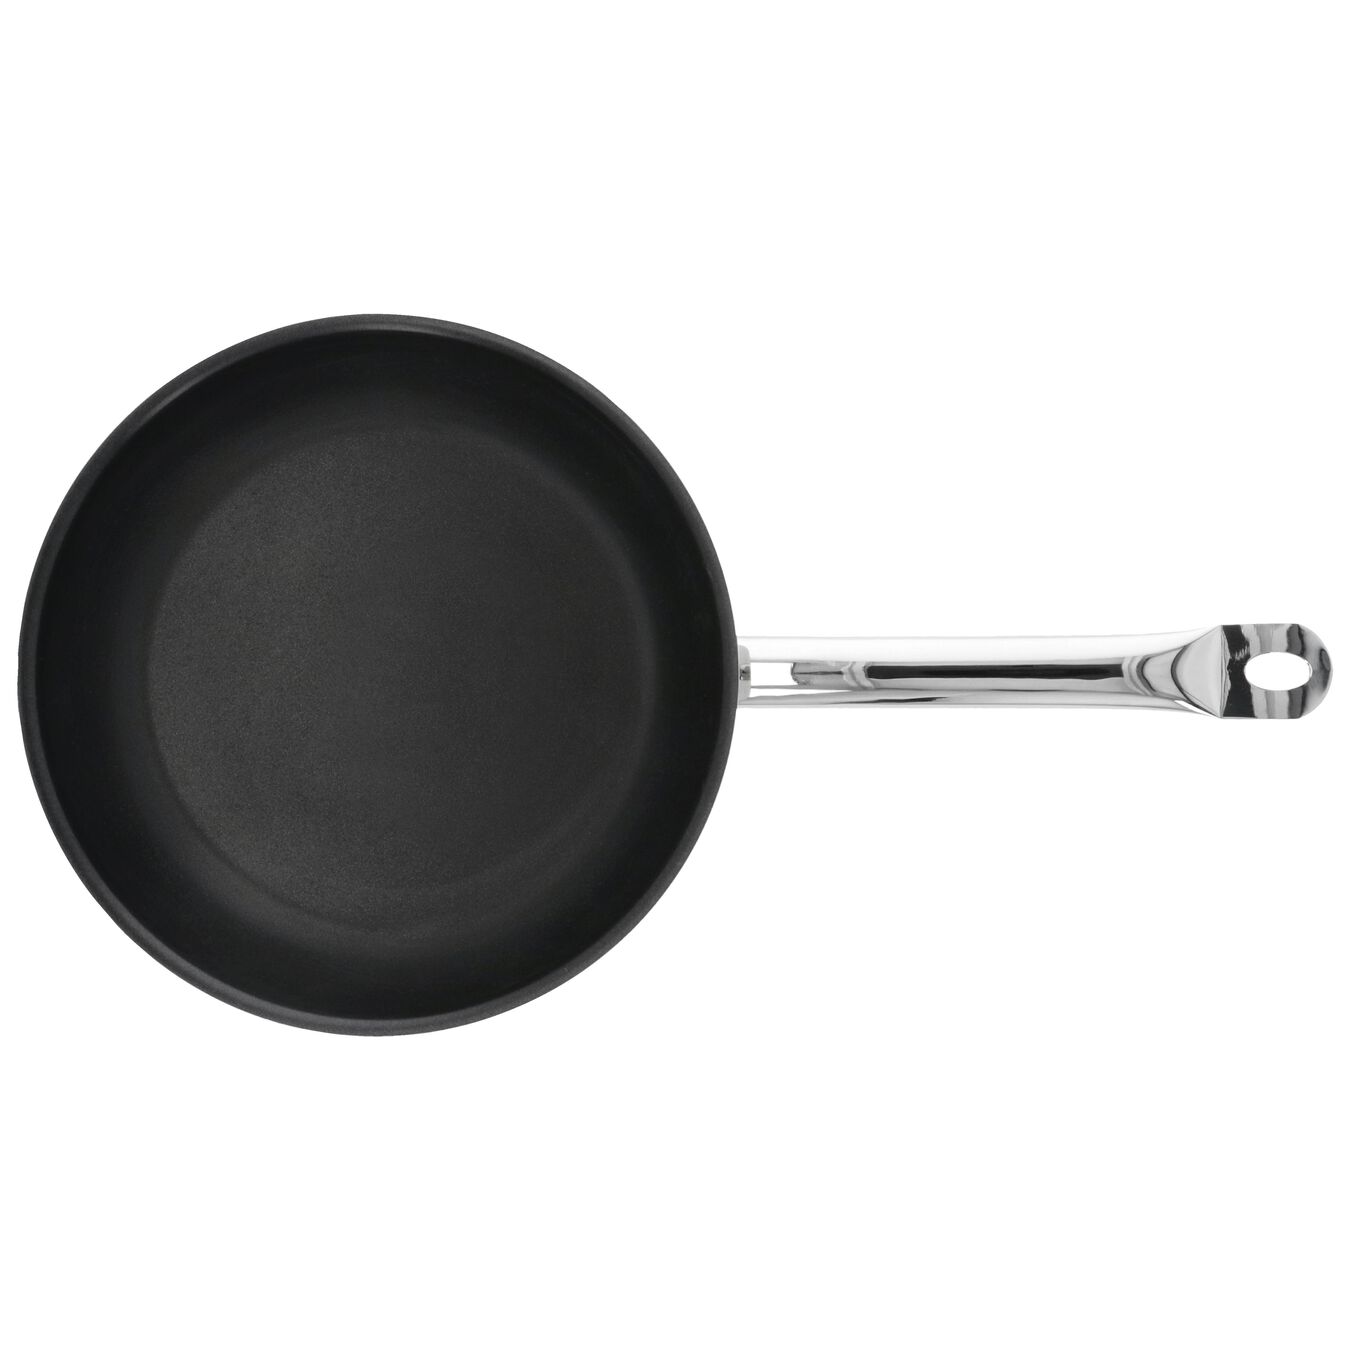 28 cm 18/10 Stainless Steel Frying pan silver-black,,large 3